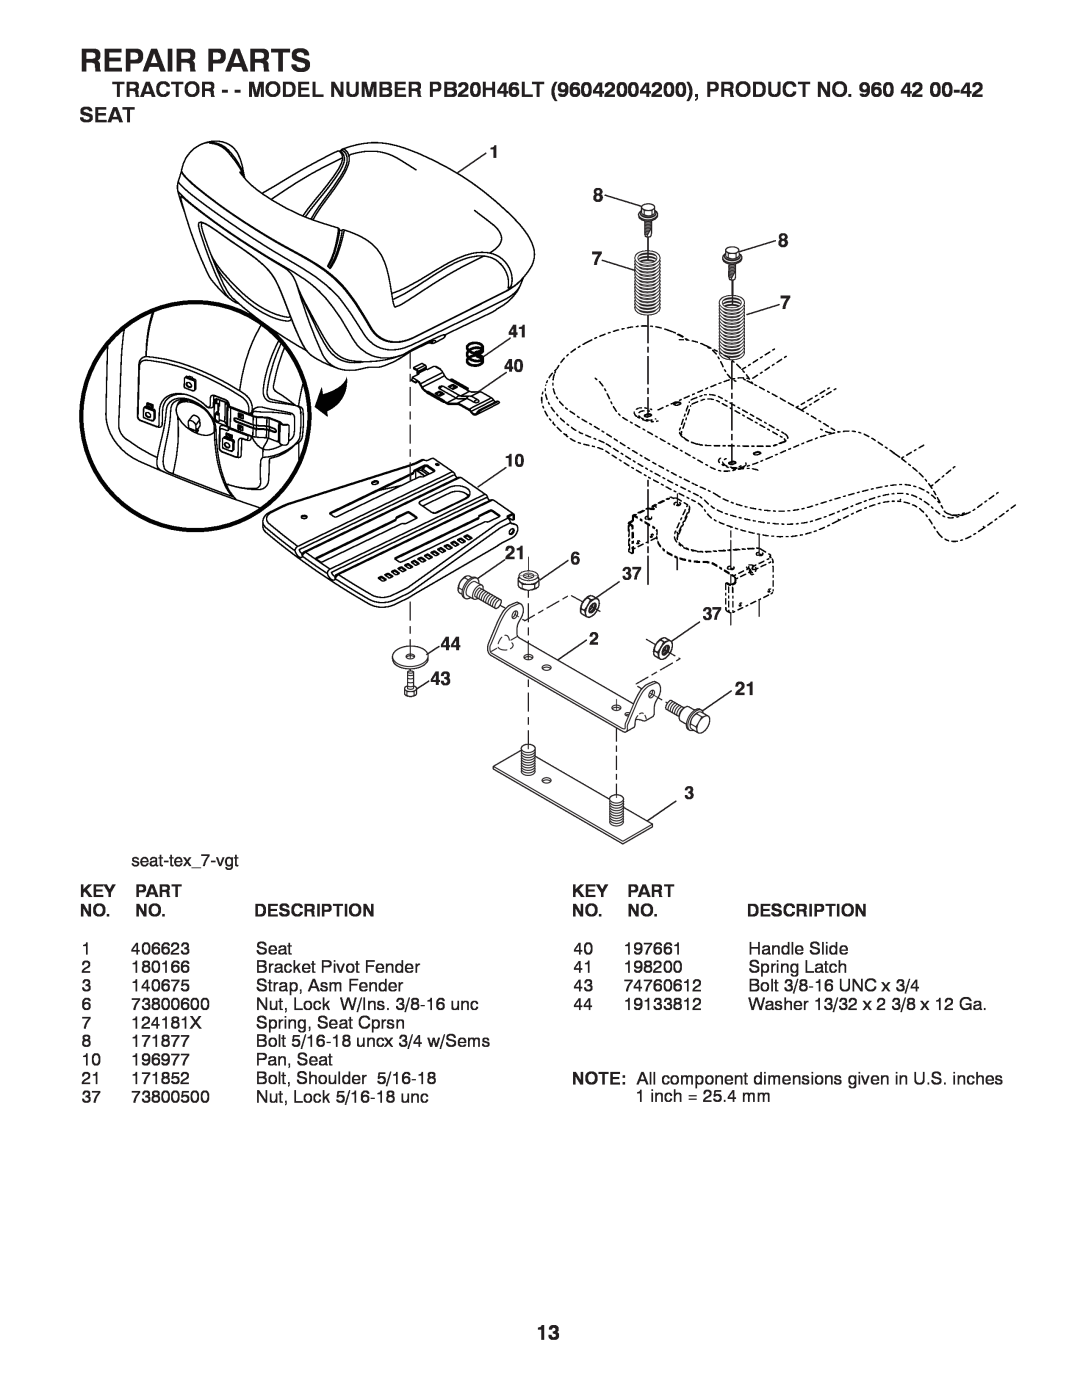 Poulan manual Seat, Repair Parts, TRACTOR - - MODEL NUMBER PB20H46LT 96042004200, PRODUCT NO. 960 42, Description 